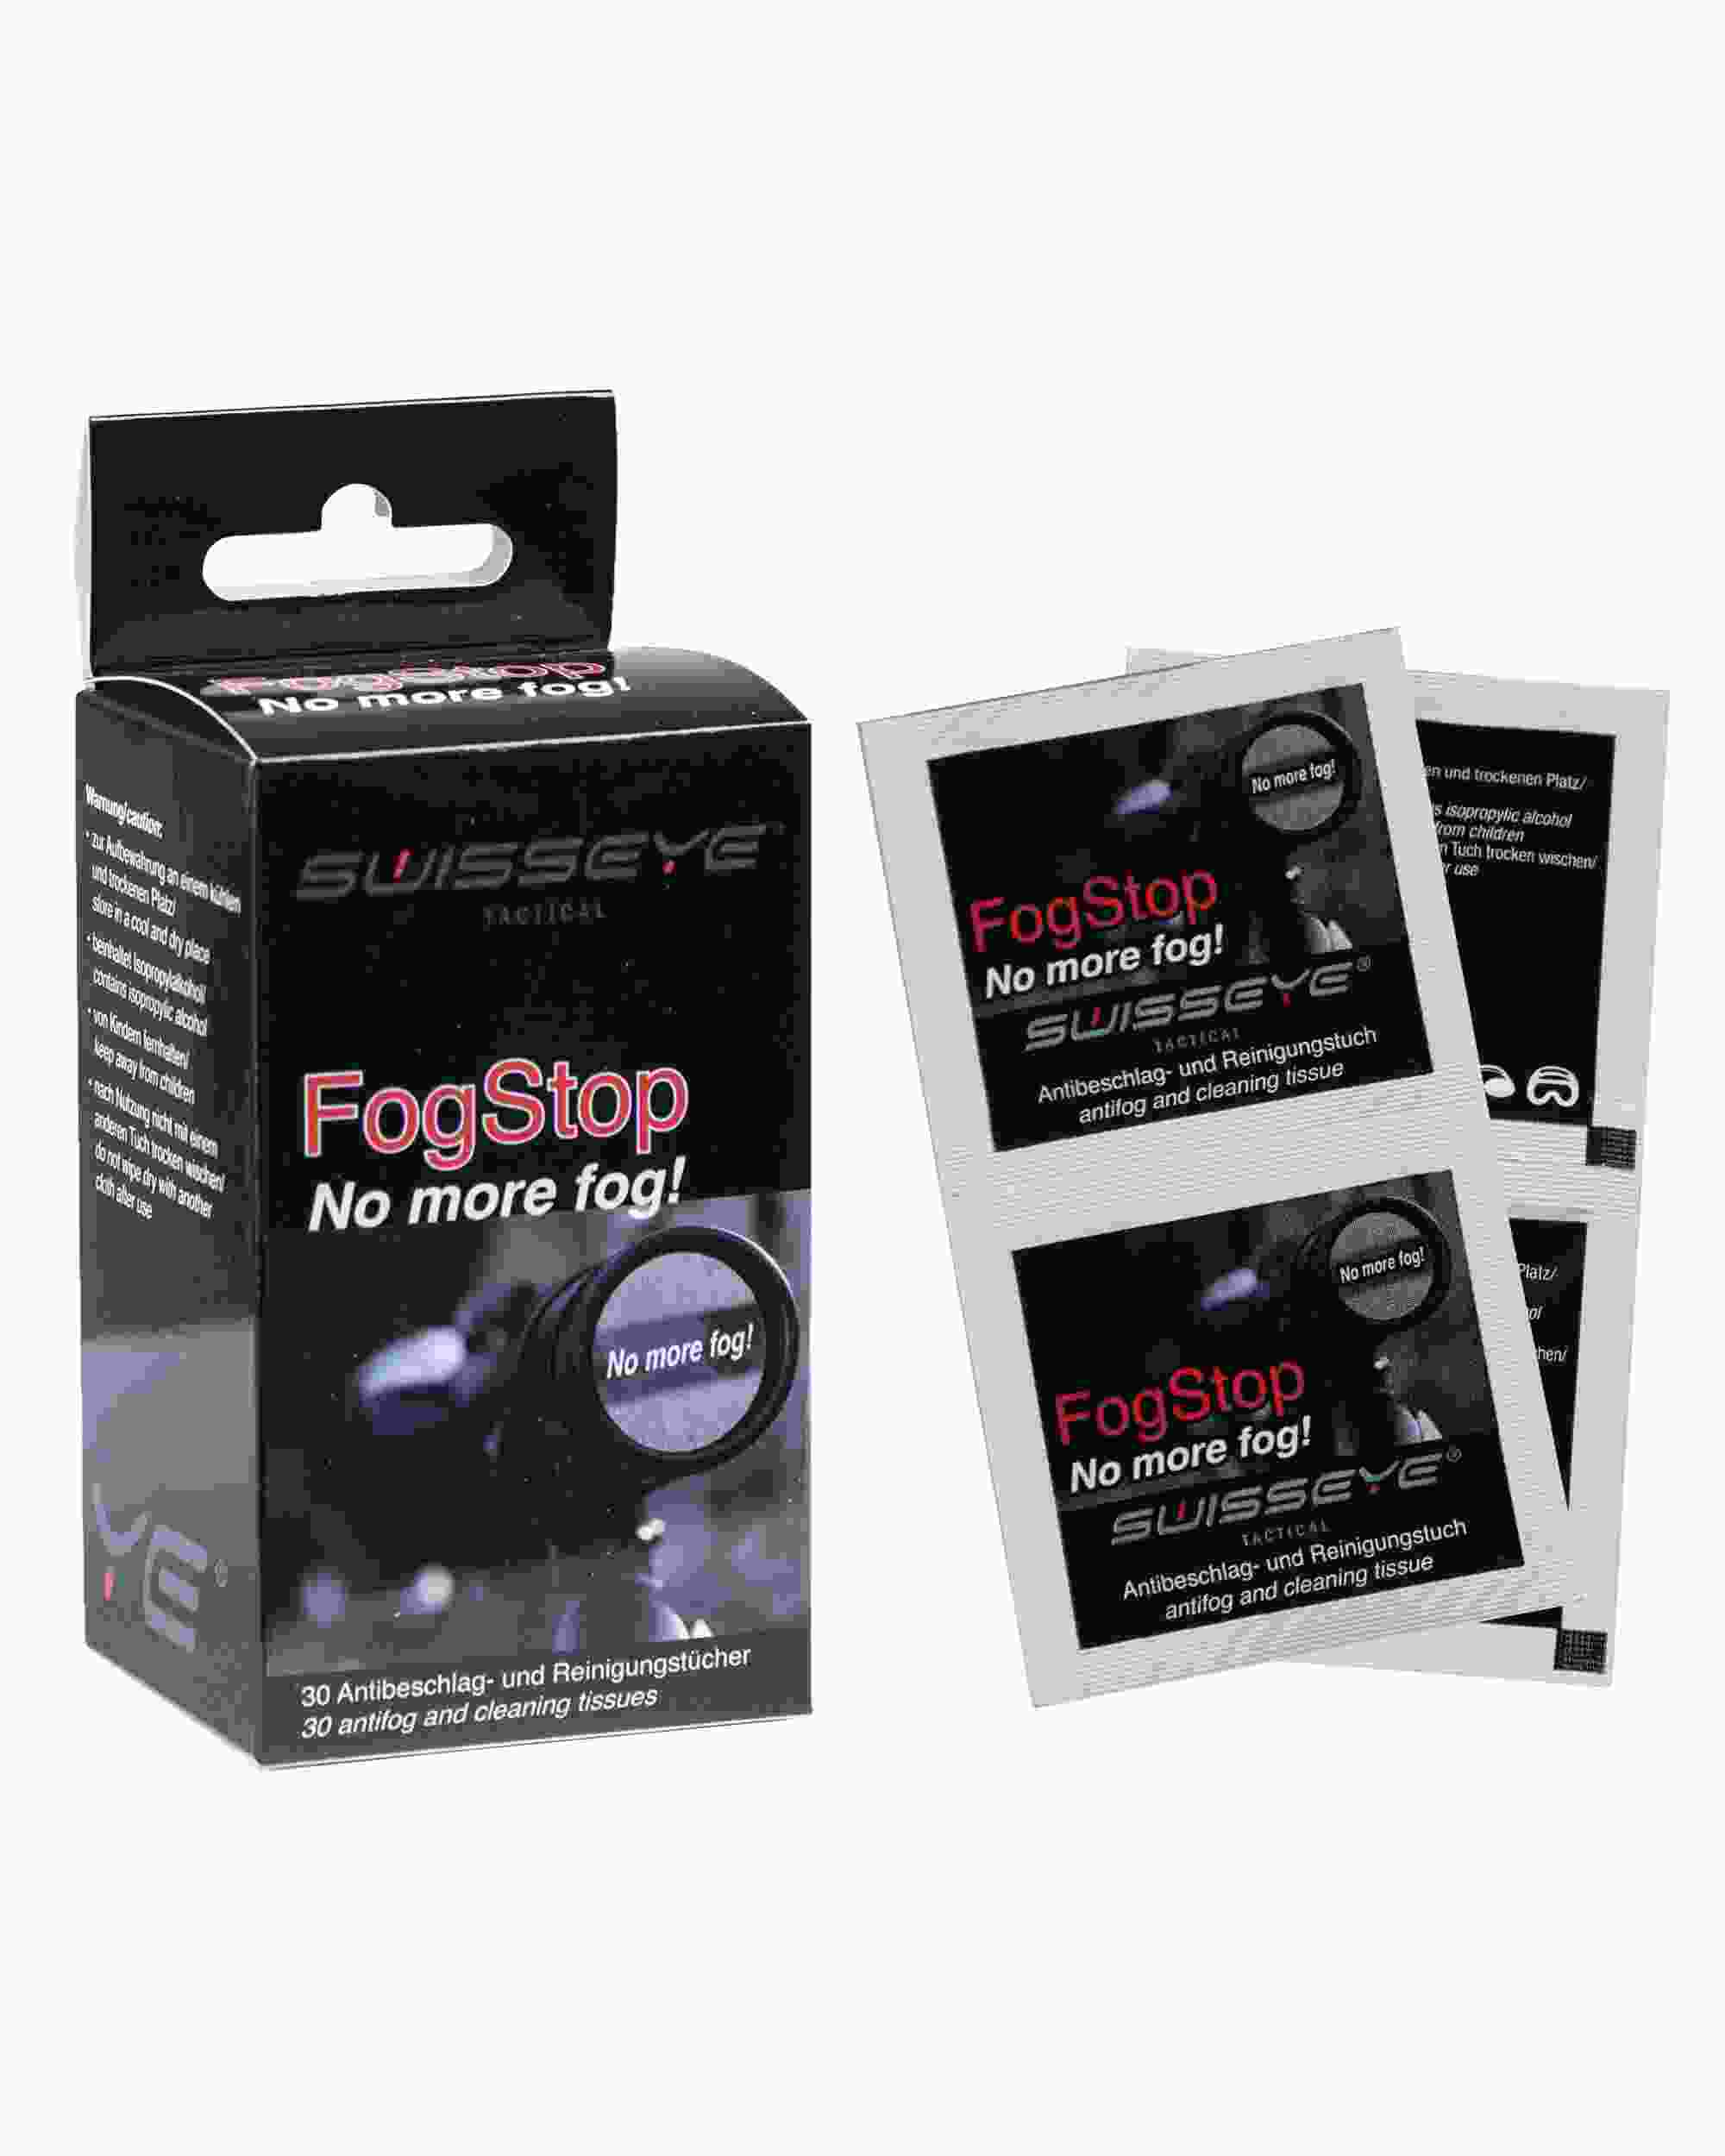 Fog Stop Swiss Eye® Tactical (12 Pack/Display)